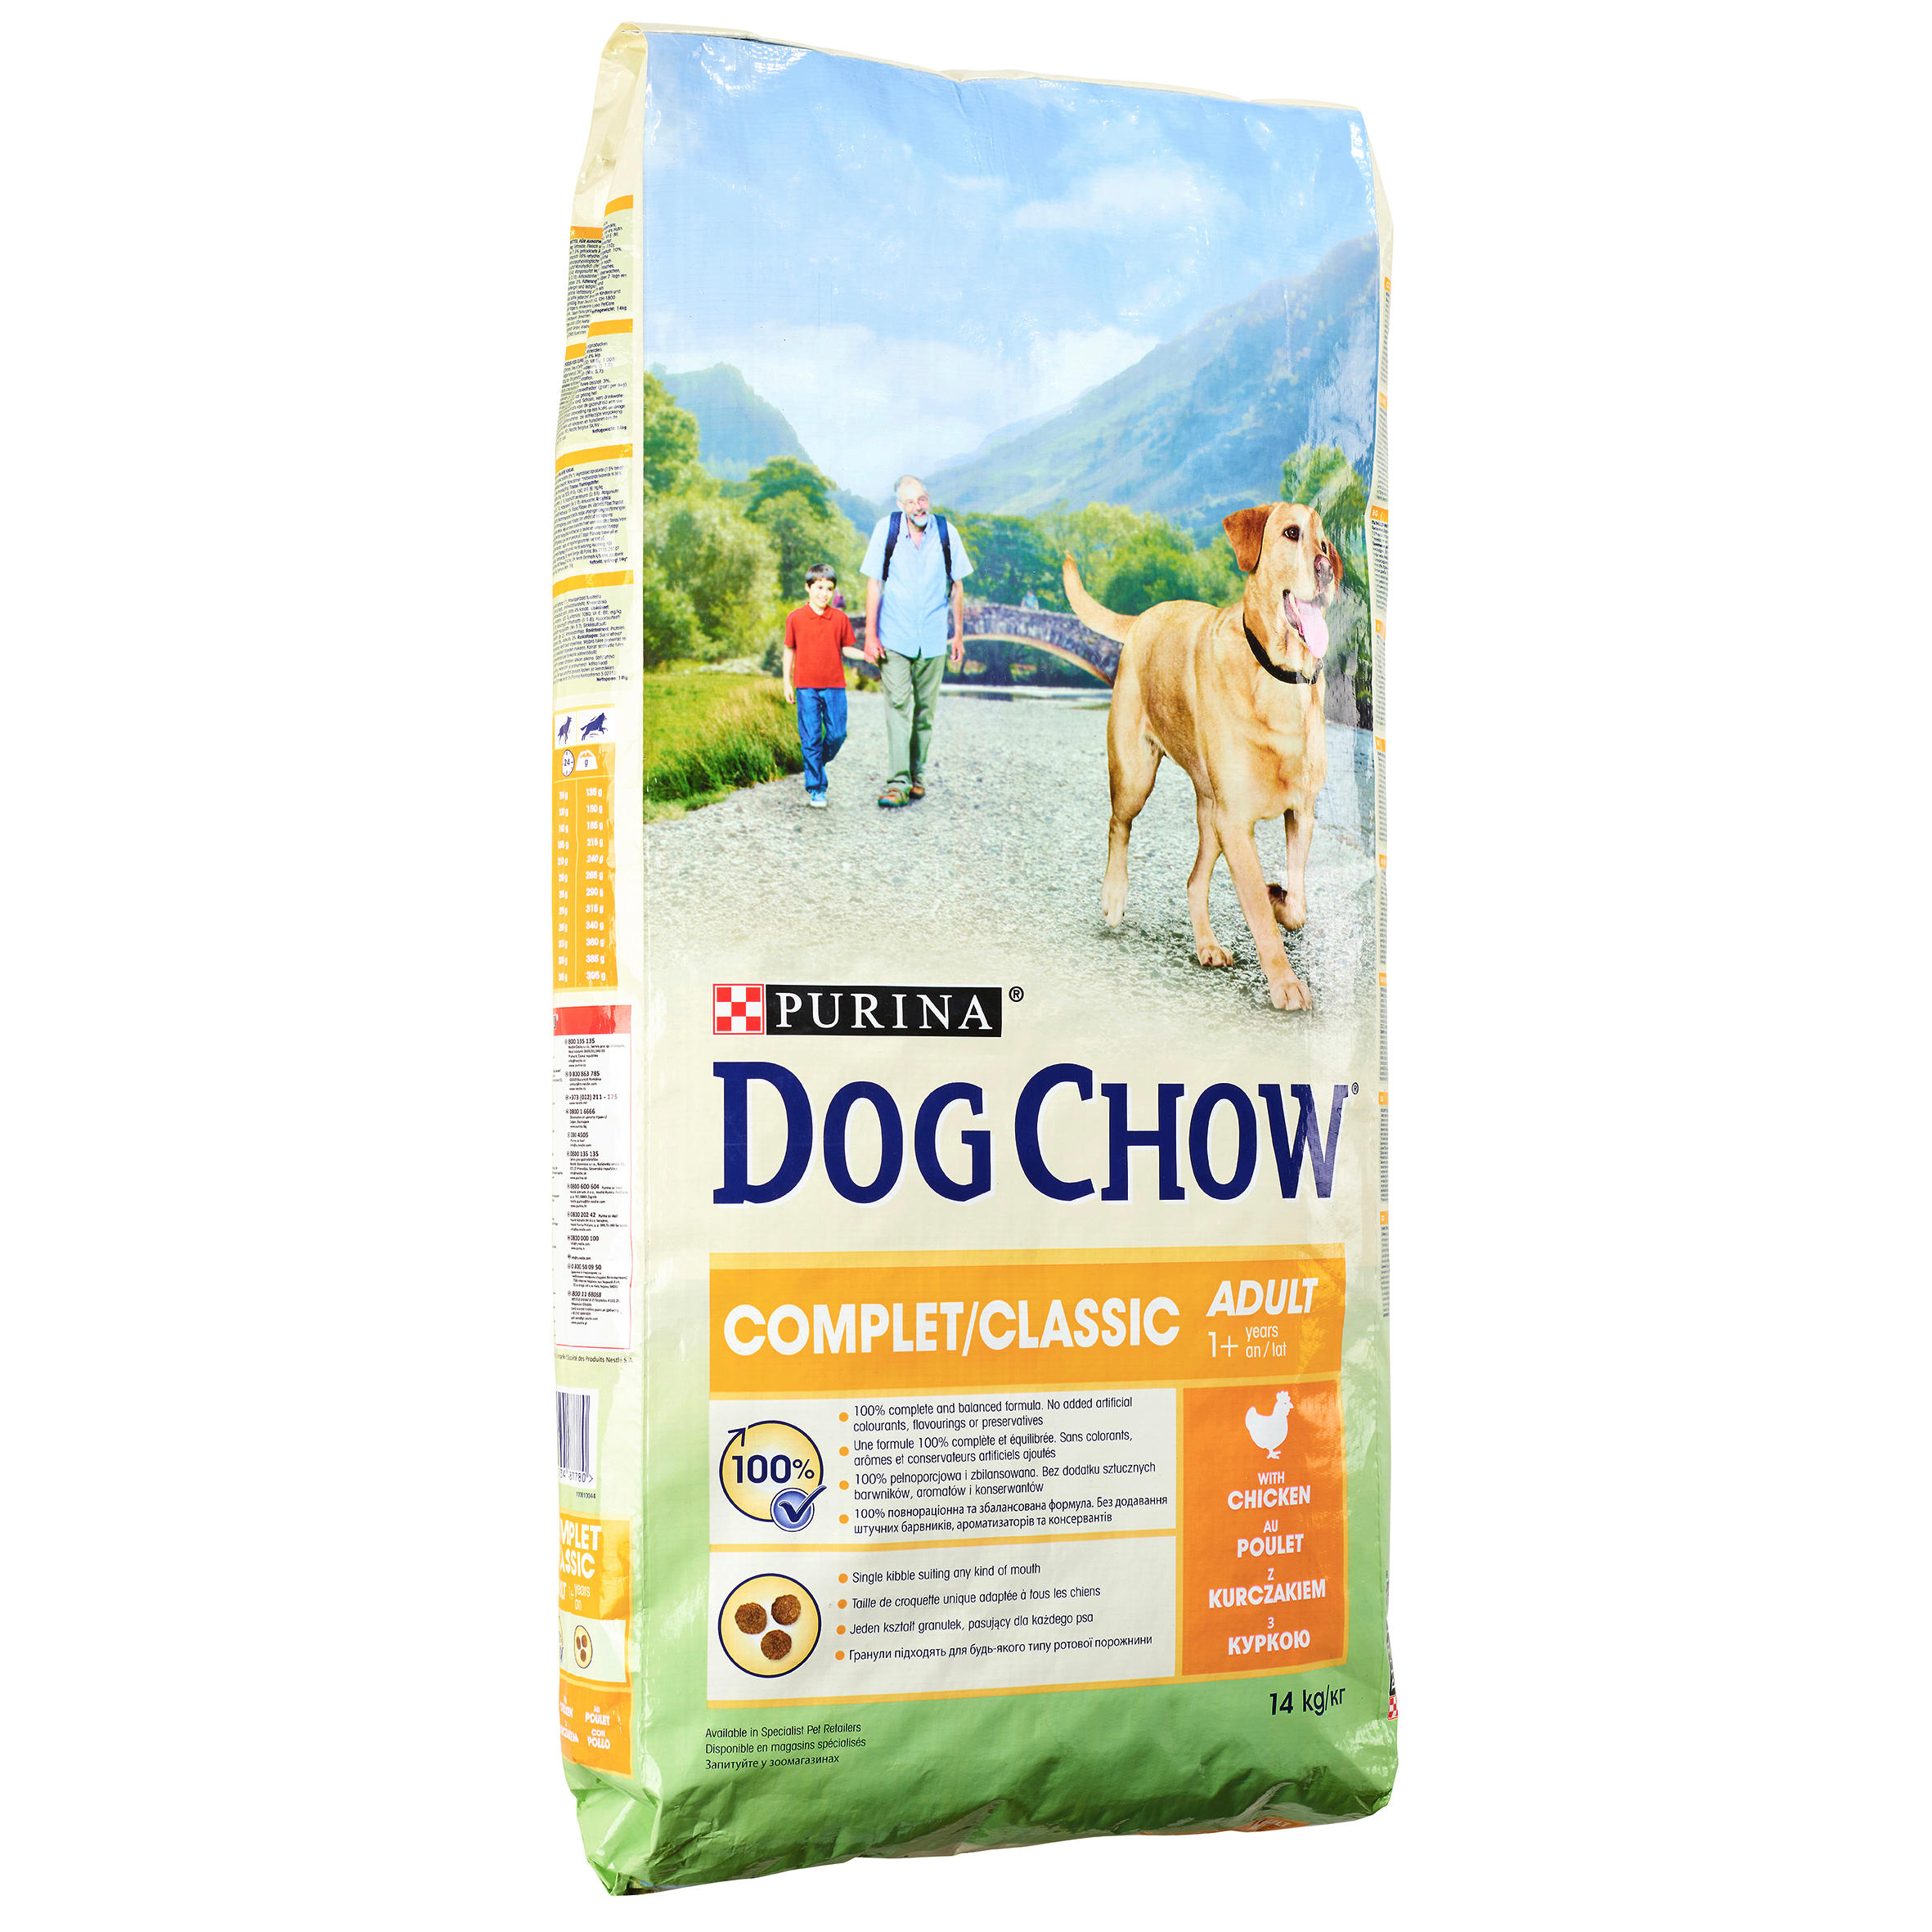 Crochete câini CLASSIC PUI DOGSHOW Adult 14 kg DOG CHOW decathlon.ro